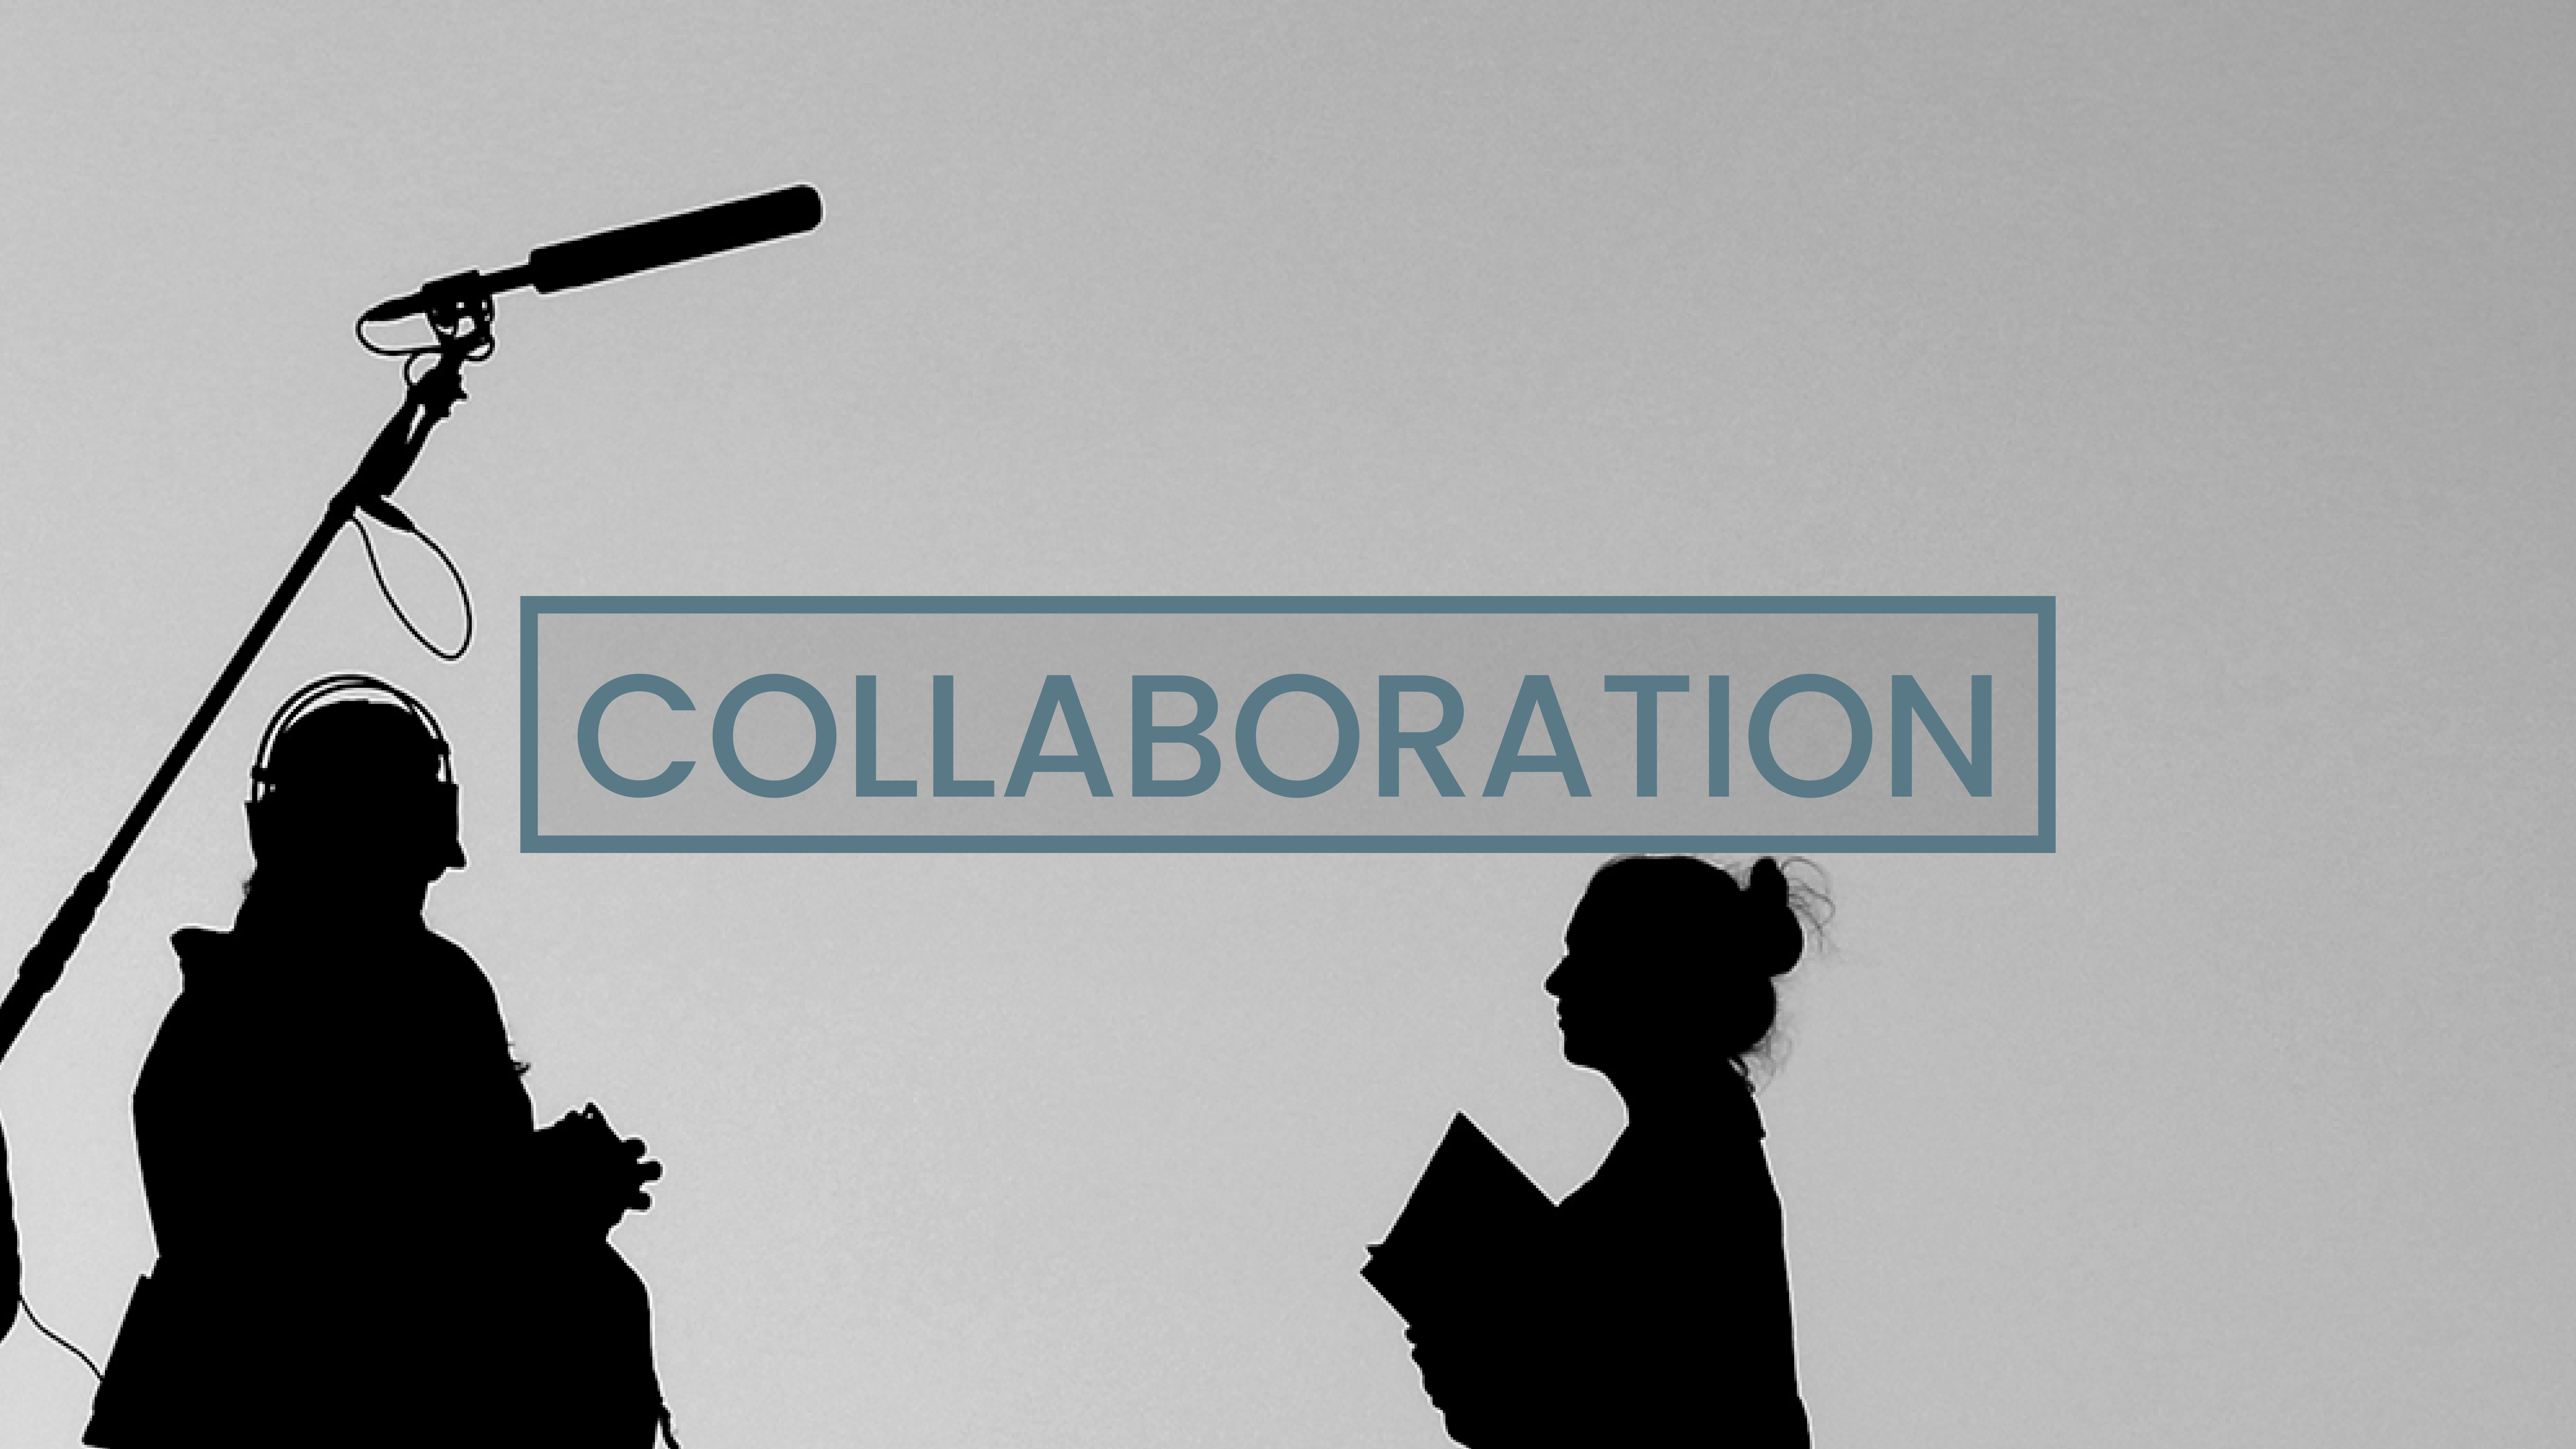 CollaborationBW